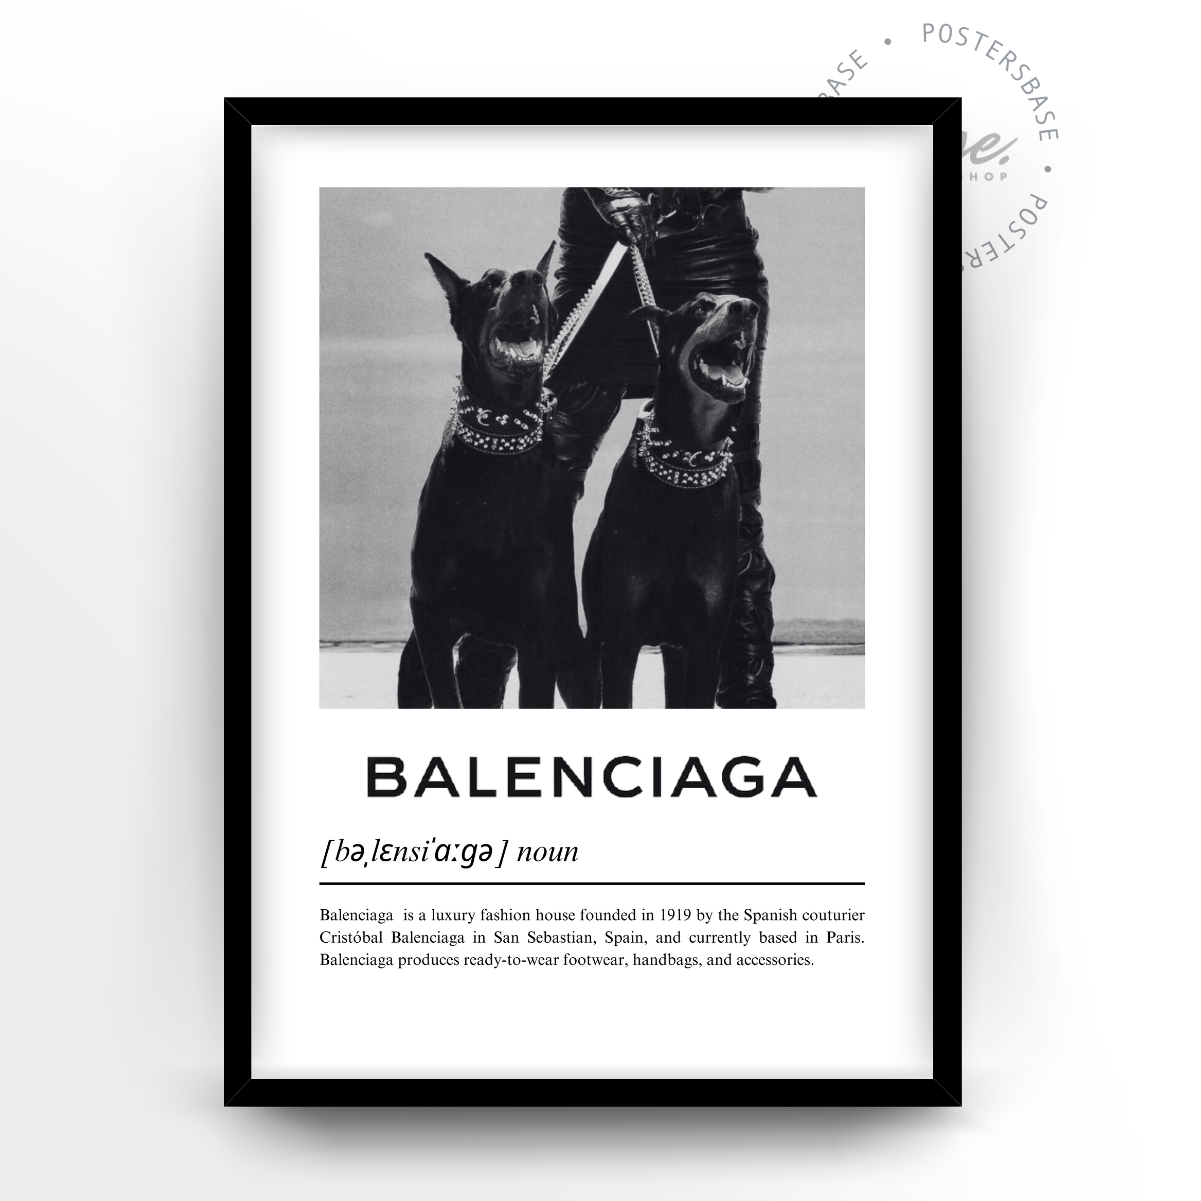 Balenciaga History